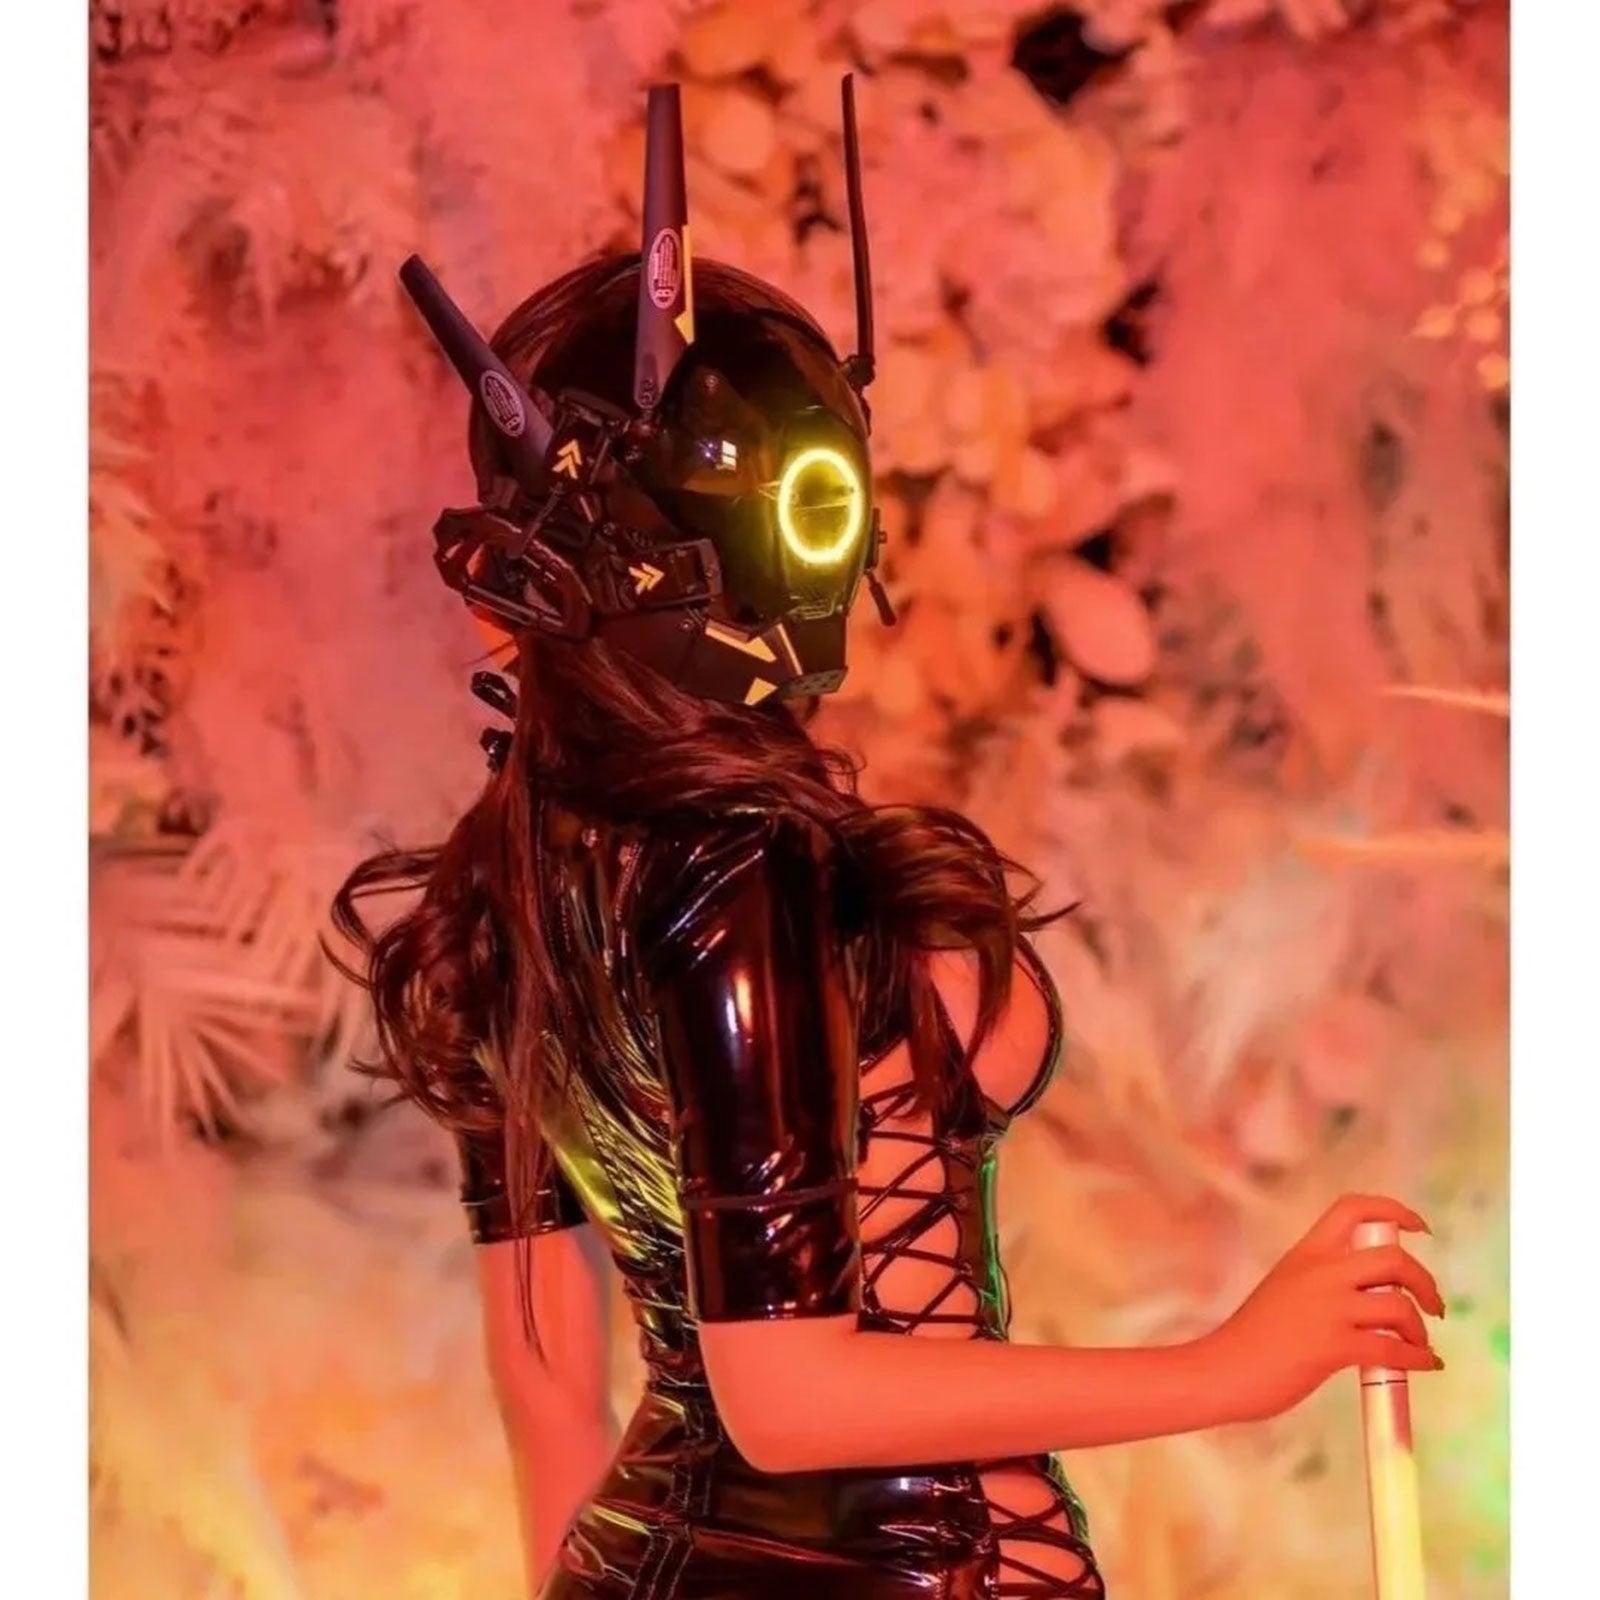 JAUPTO Cyberpunk Gothic Helmet,Punk Mask Techwear, Halloween Cosplay Technology Helmet Cosplay,Futuristic Mask with LED Light